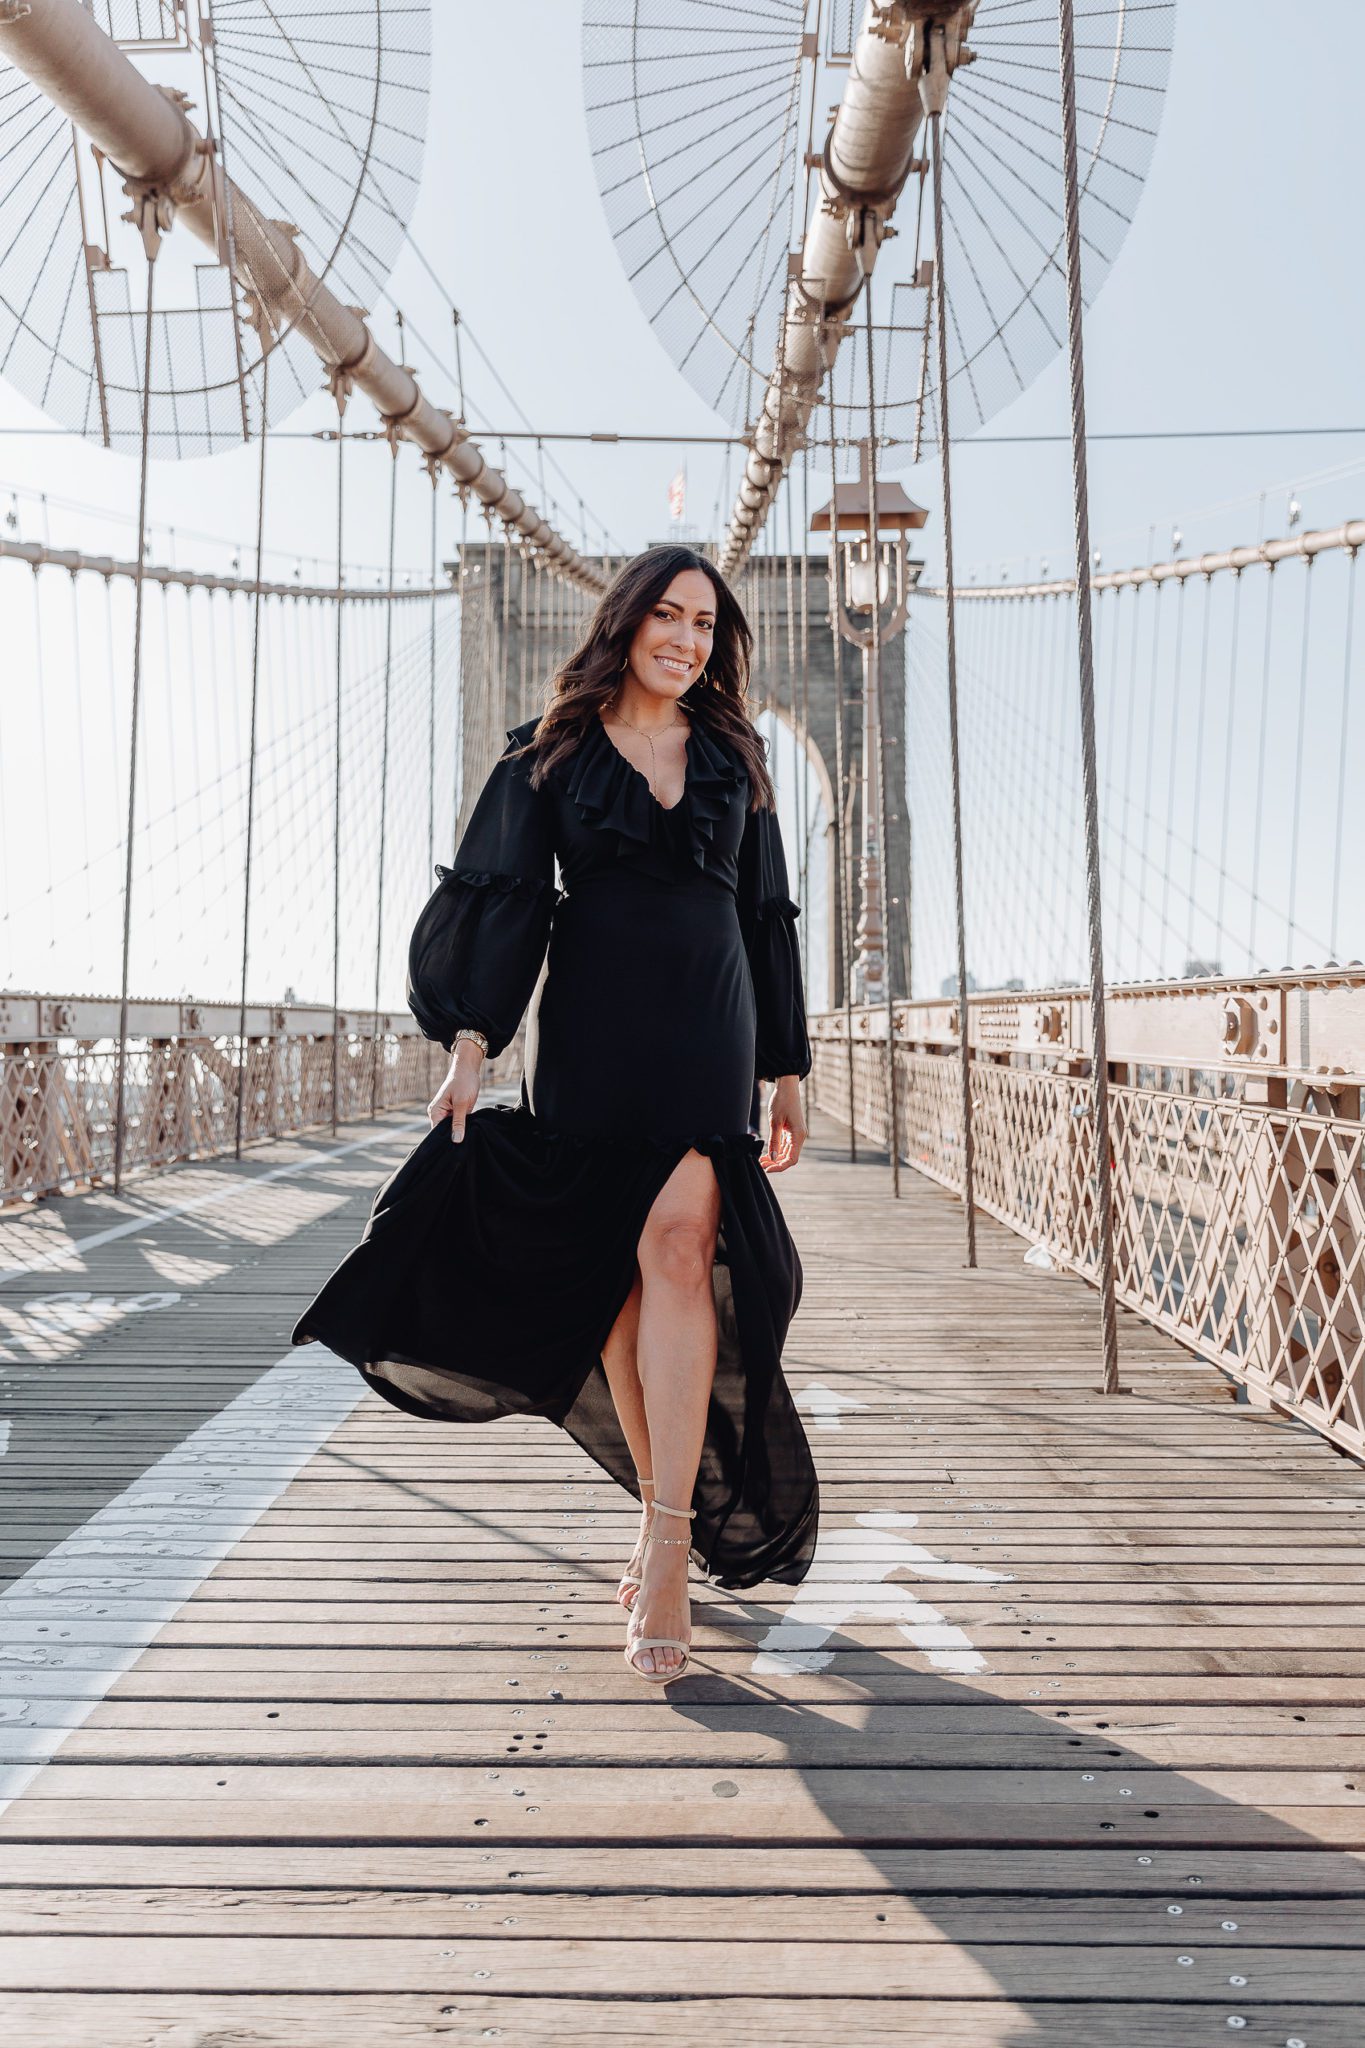 Instagram worthy places in NYC - Brooklyn Bridge